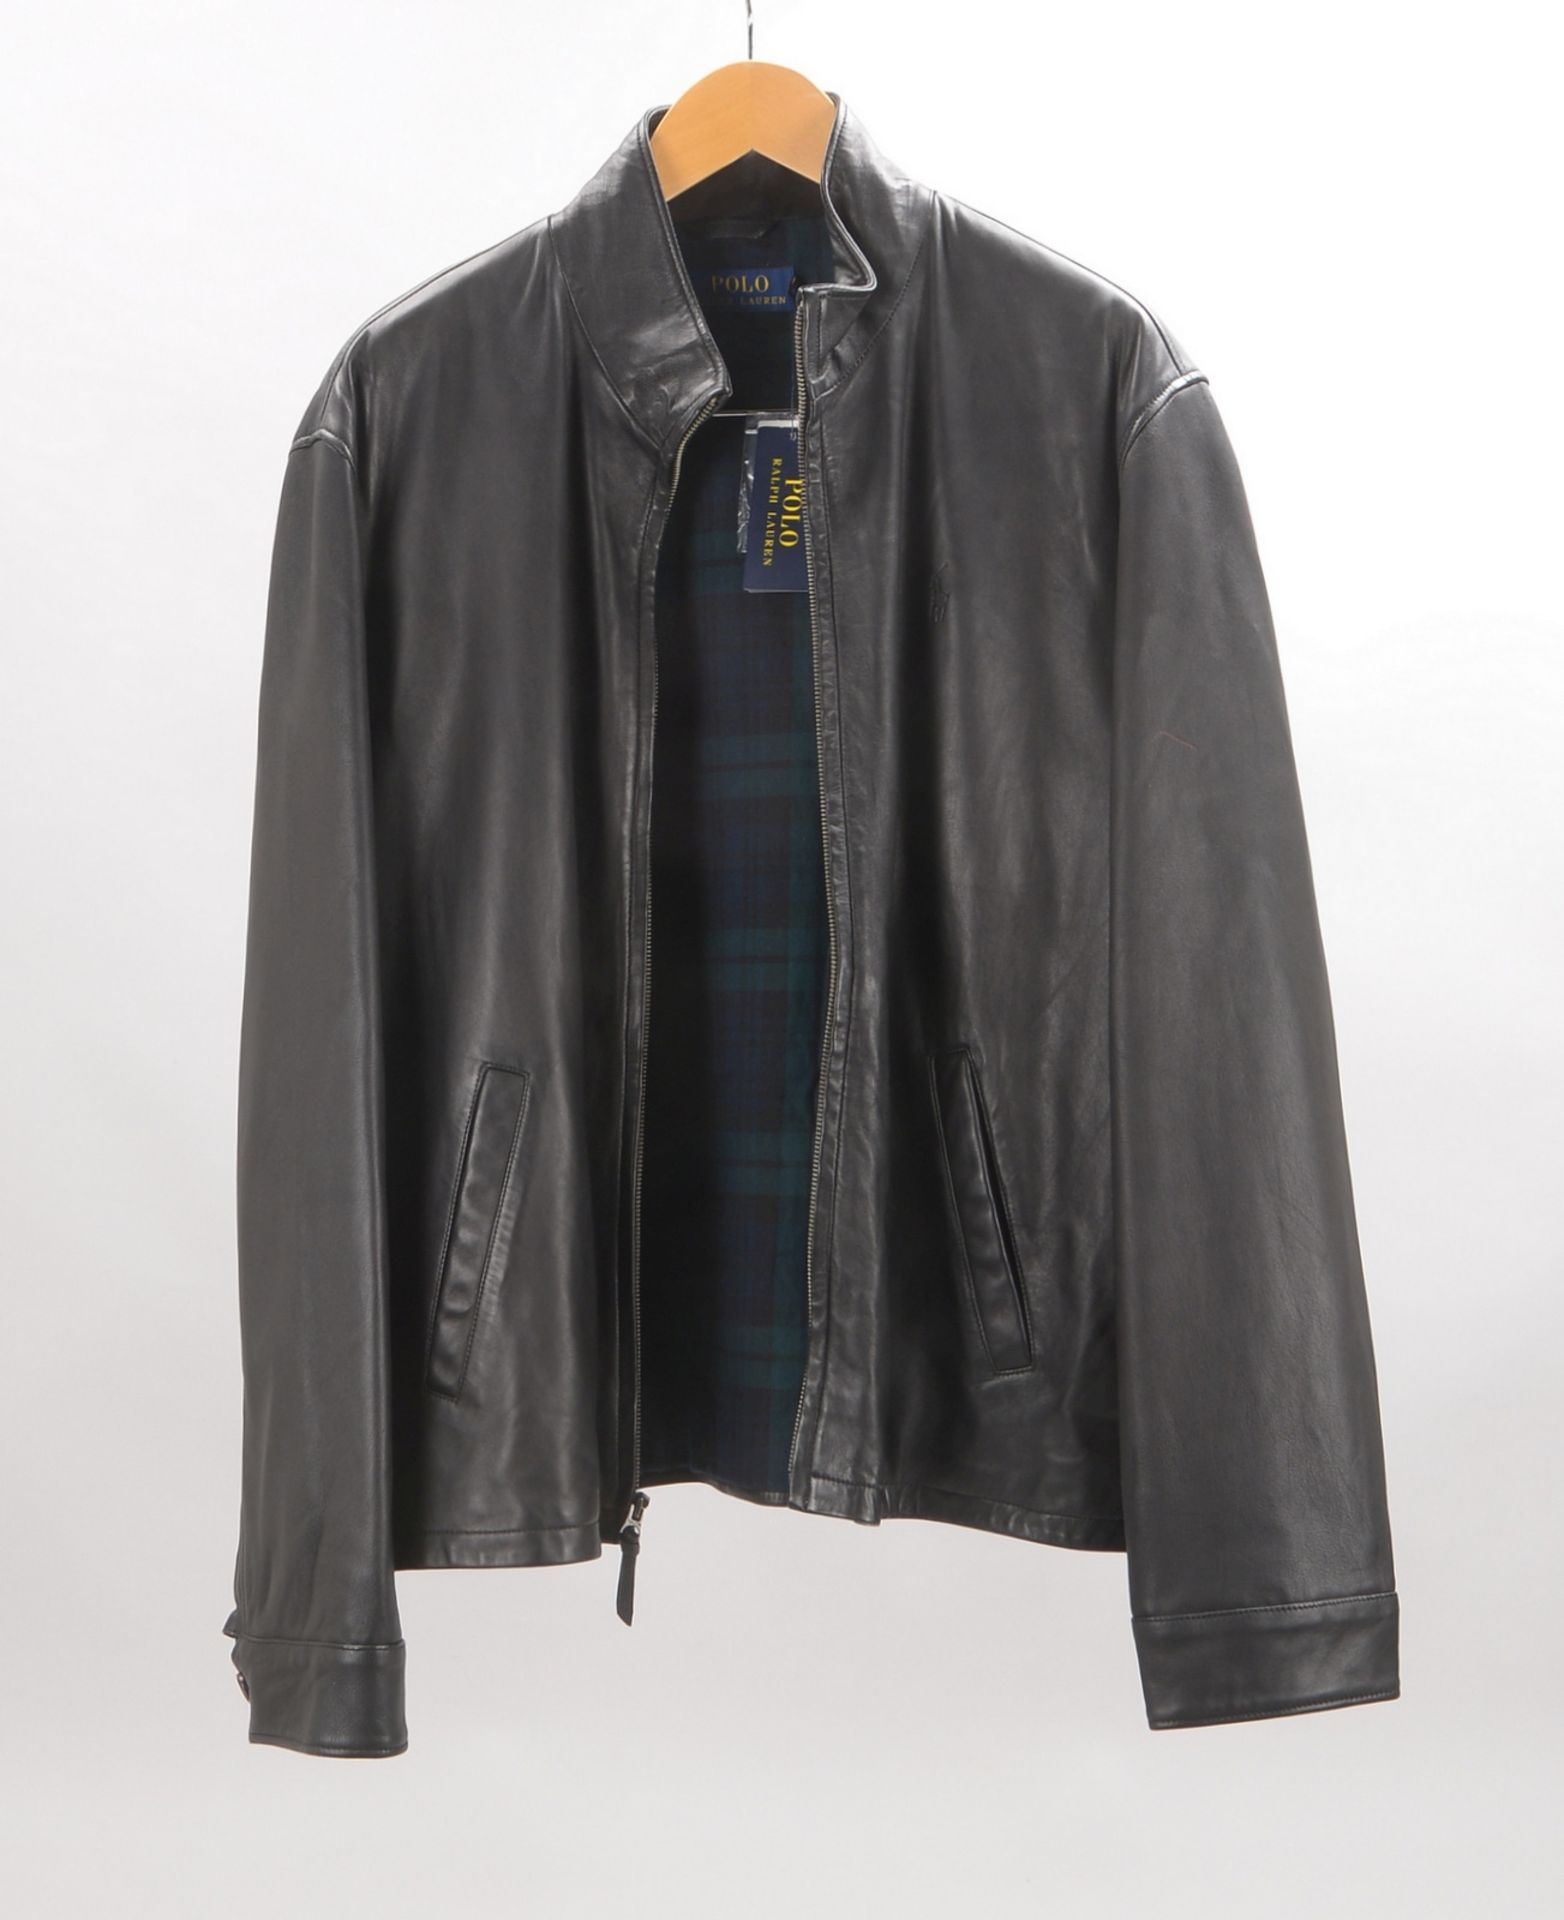 Ralph Lauren, Herren-Lederjacke, schwarzes Leder, Größe 'XL' - getragener Zust.